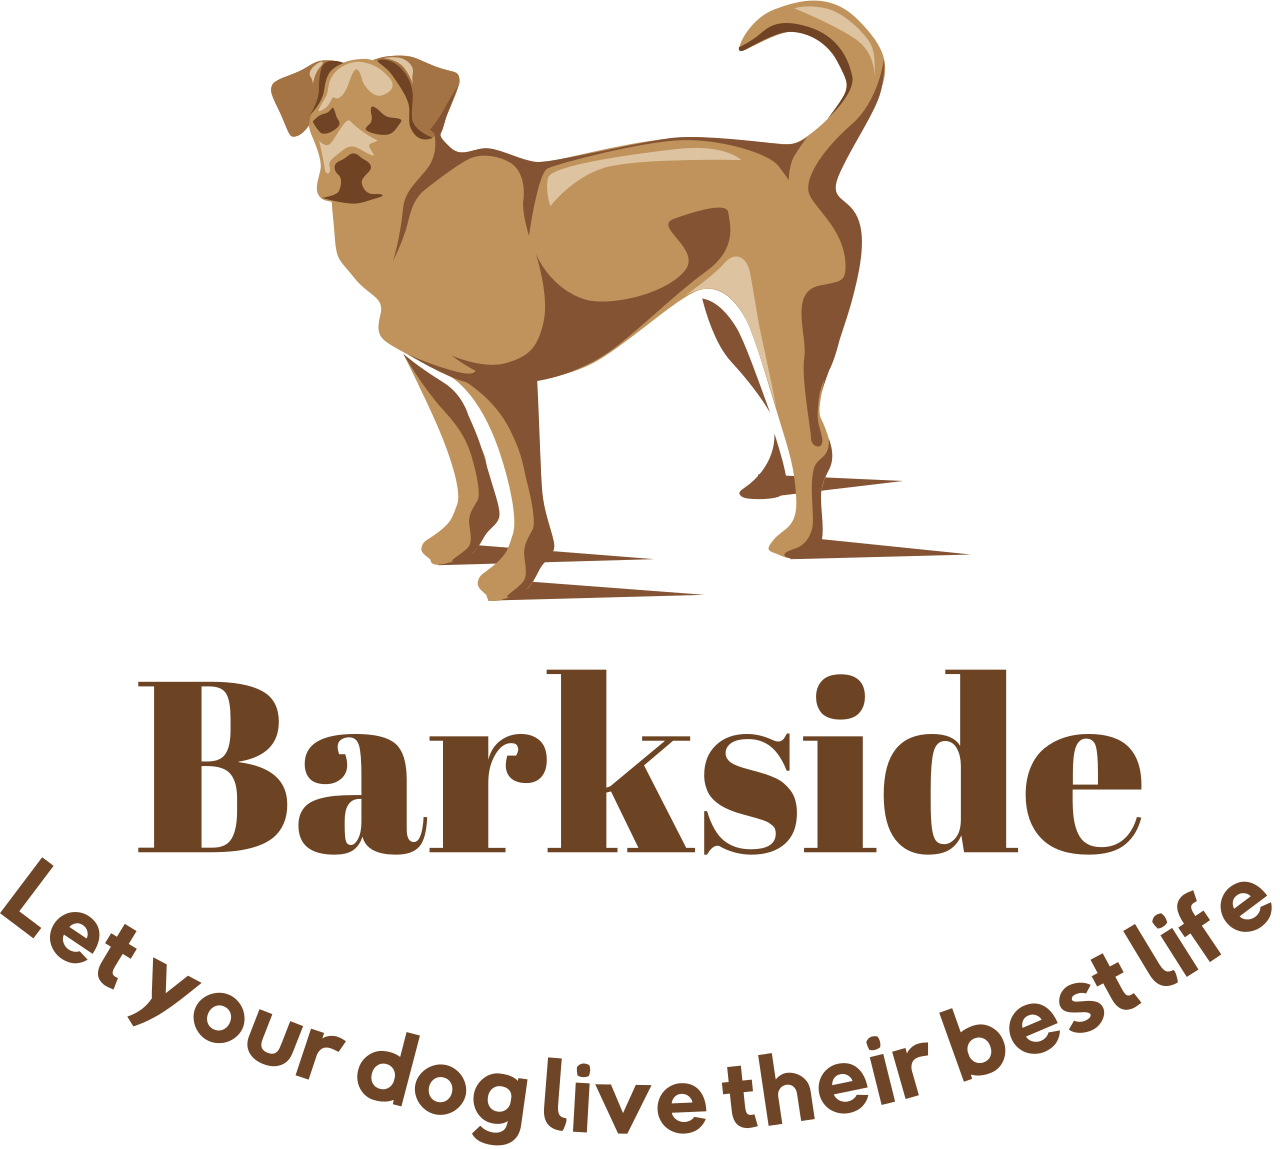 Barkside's web page